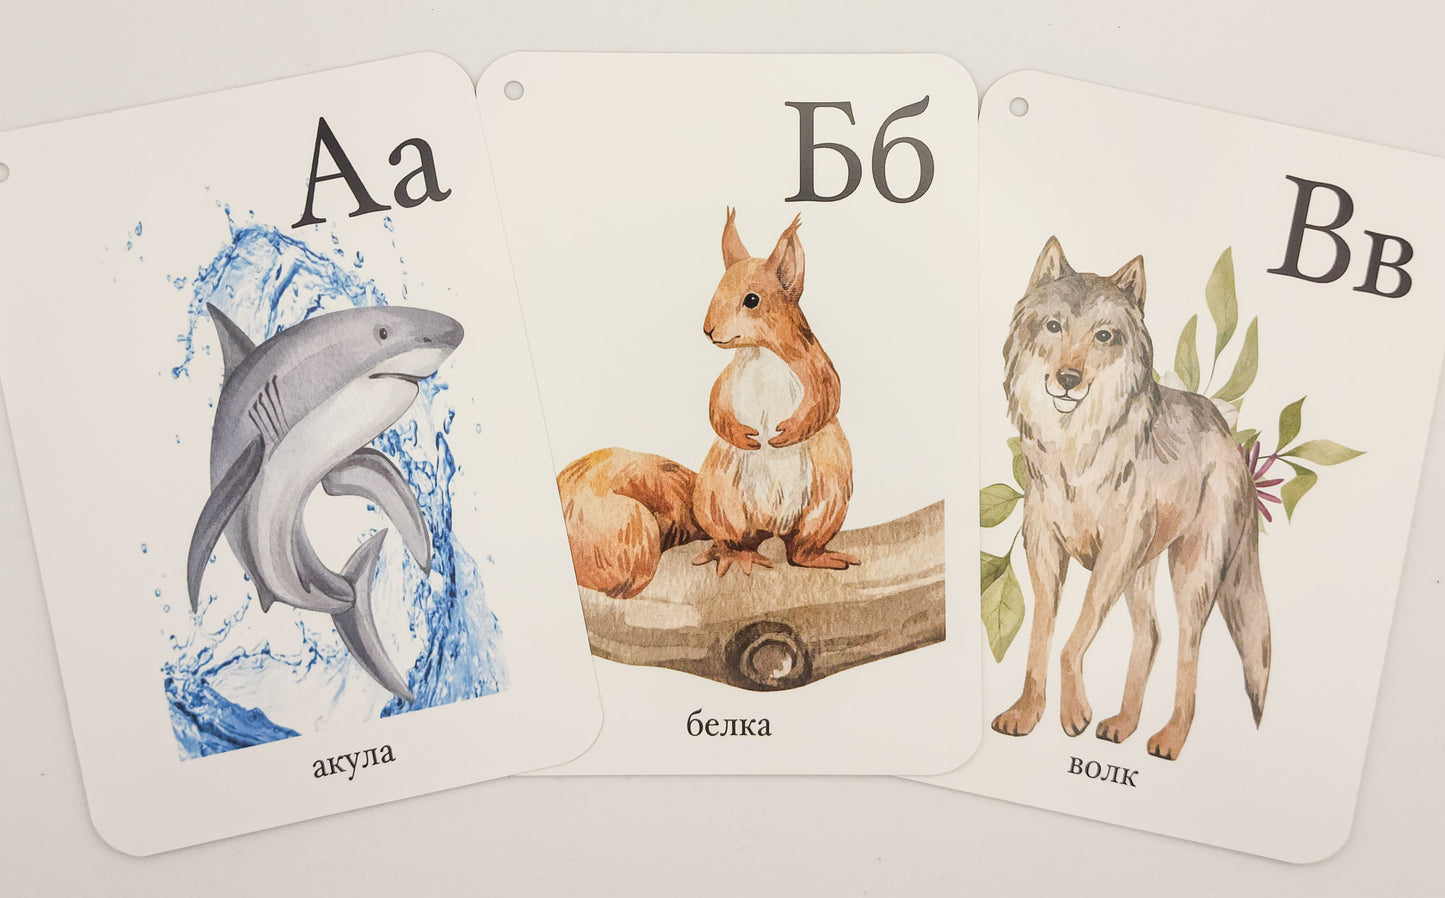 Russian Alphabet Flash Cards